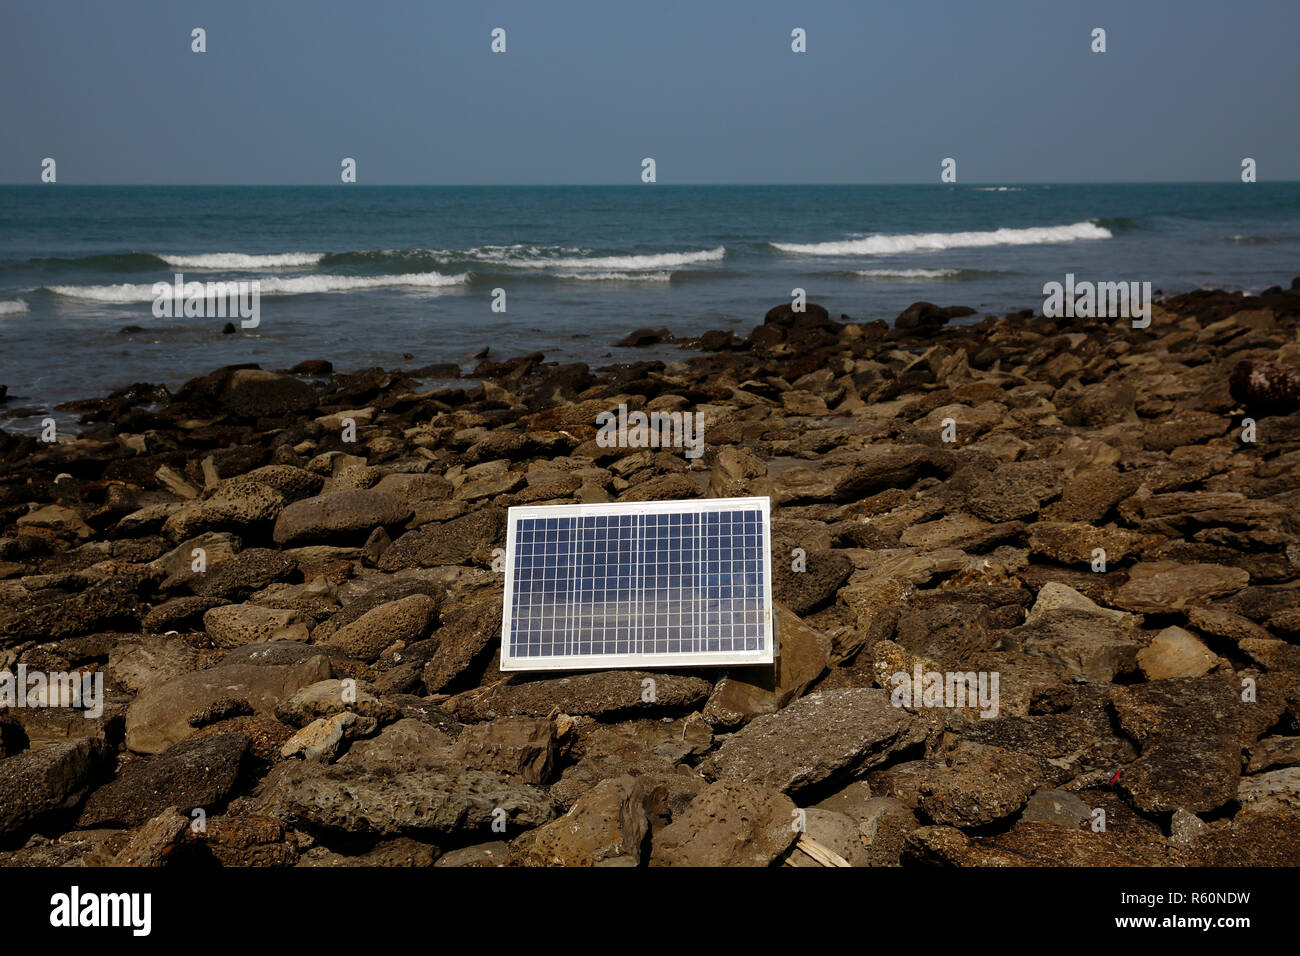 A solar panel lies under the sun on the sea beach at Saint Martin Island. Cox’s Bazar, Bangladesh. Stock Photo